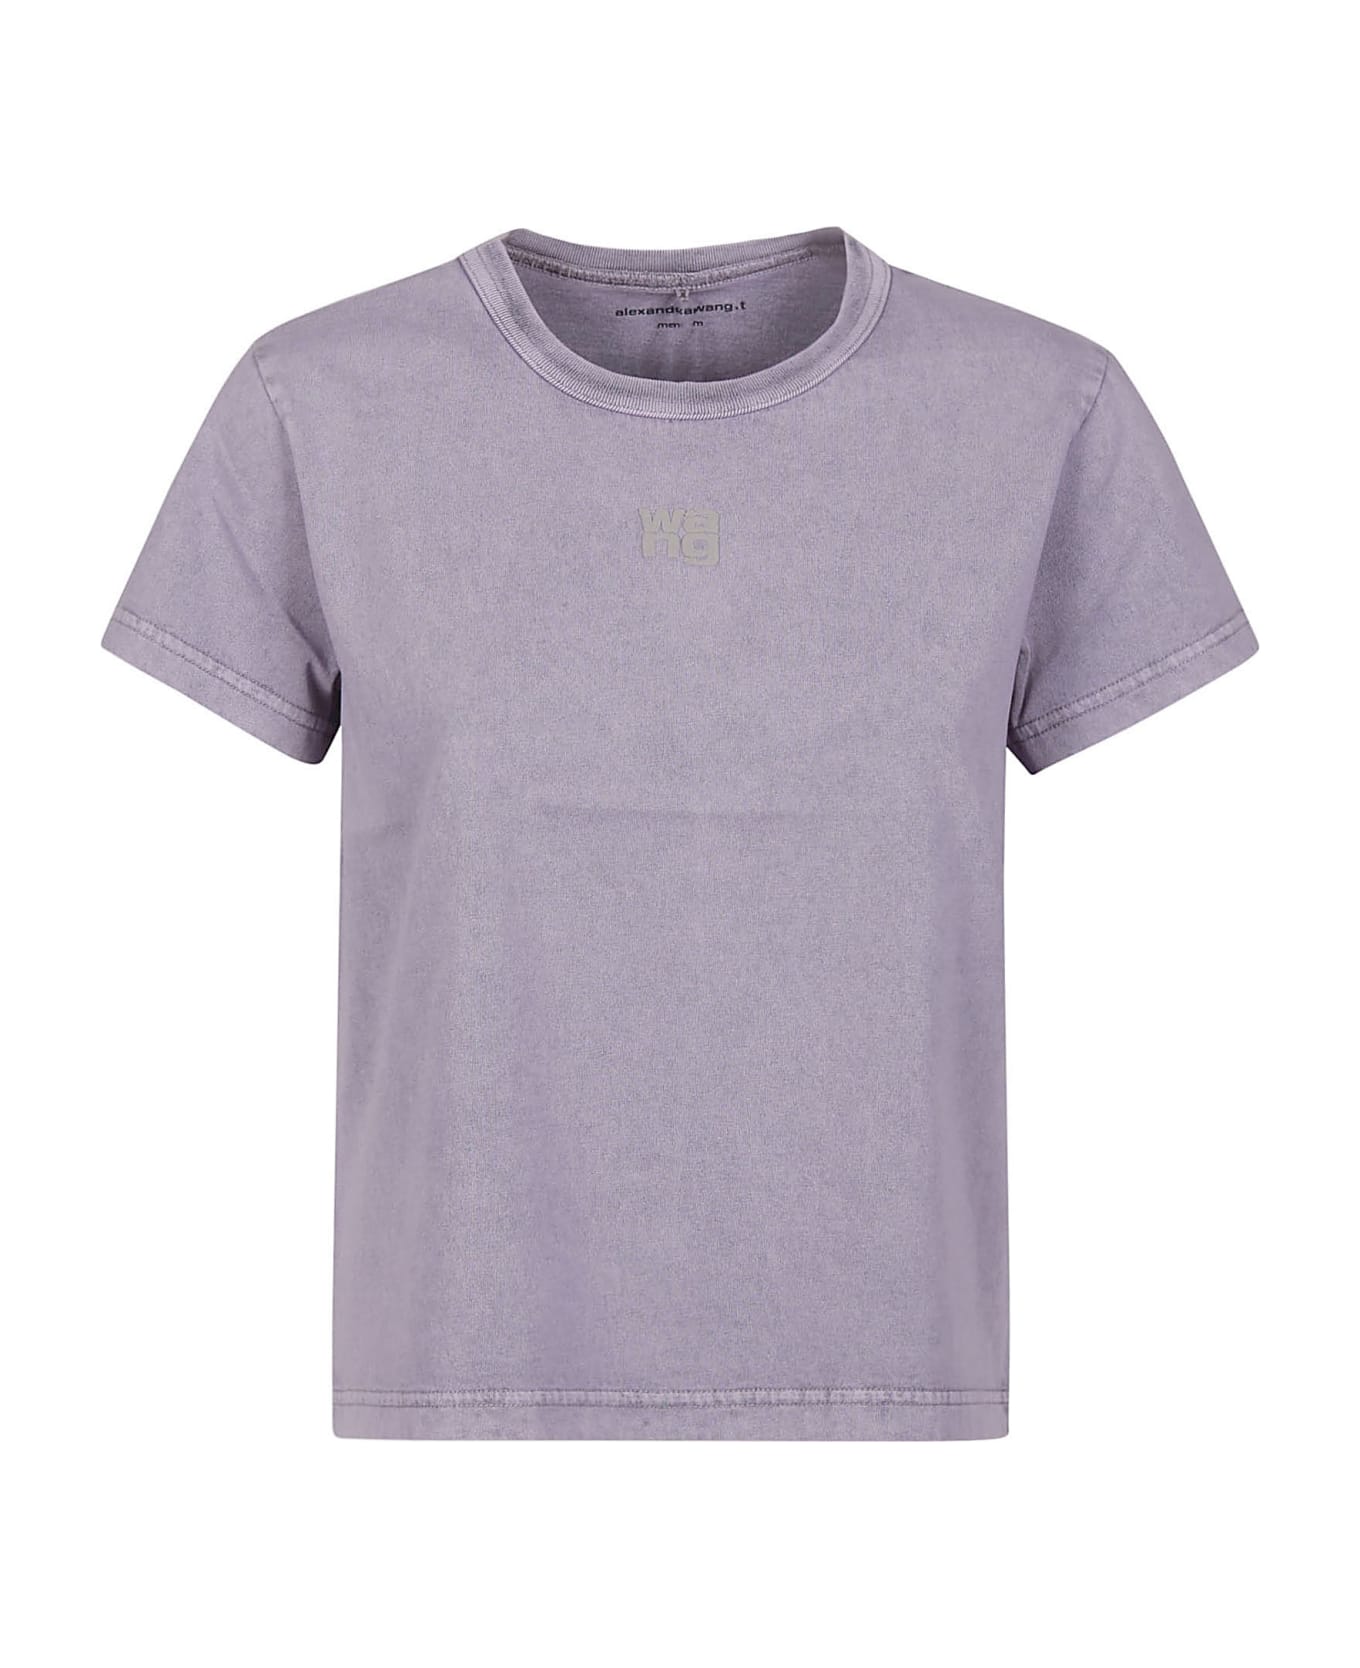 T by Alexander Wang Puff Logo Bound Neck Essential Shrunk T-shirt - A Acid Pink Lavender